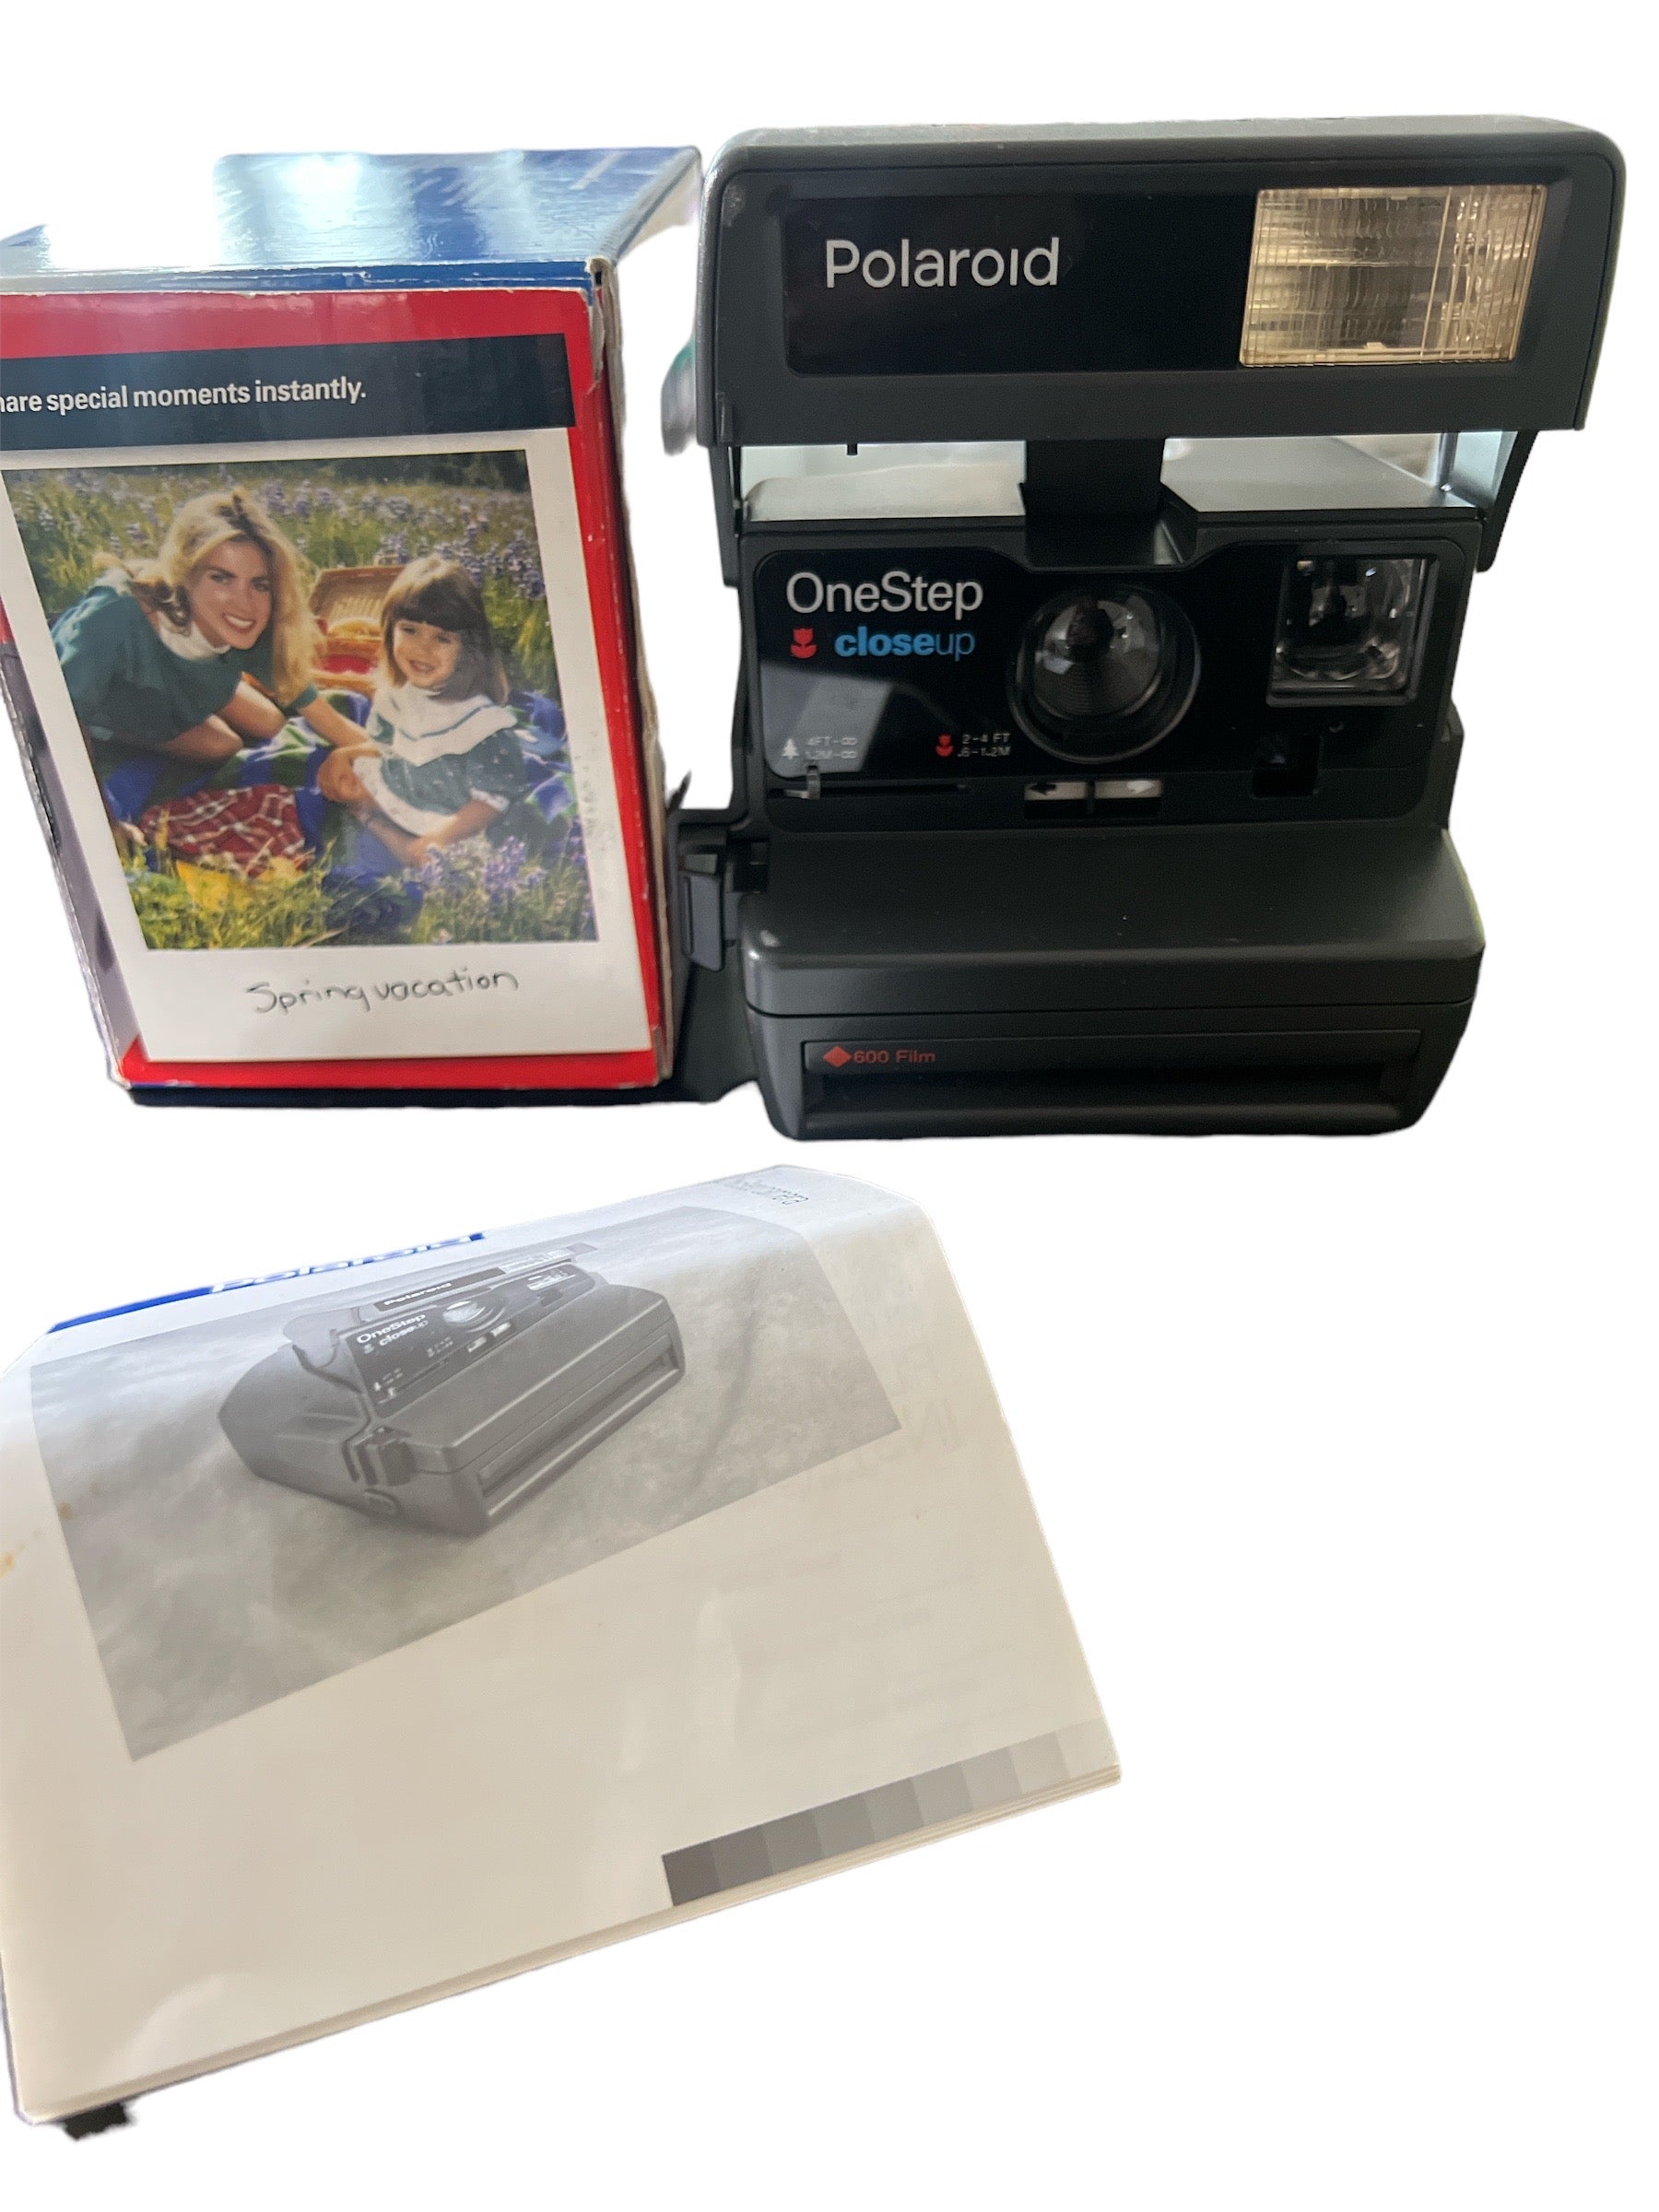 Buy Polaroid 600 Instant Film - Polaroid US